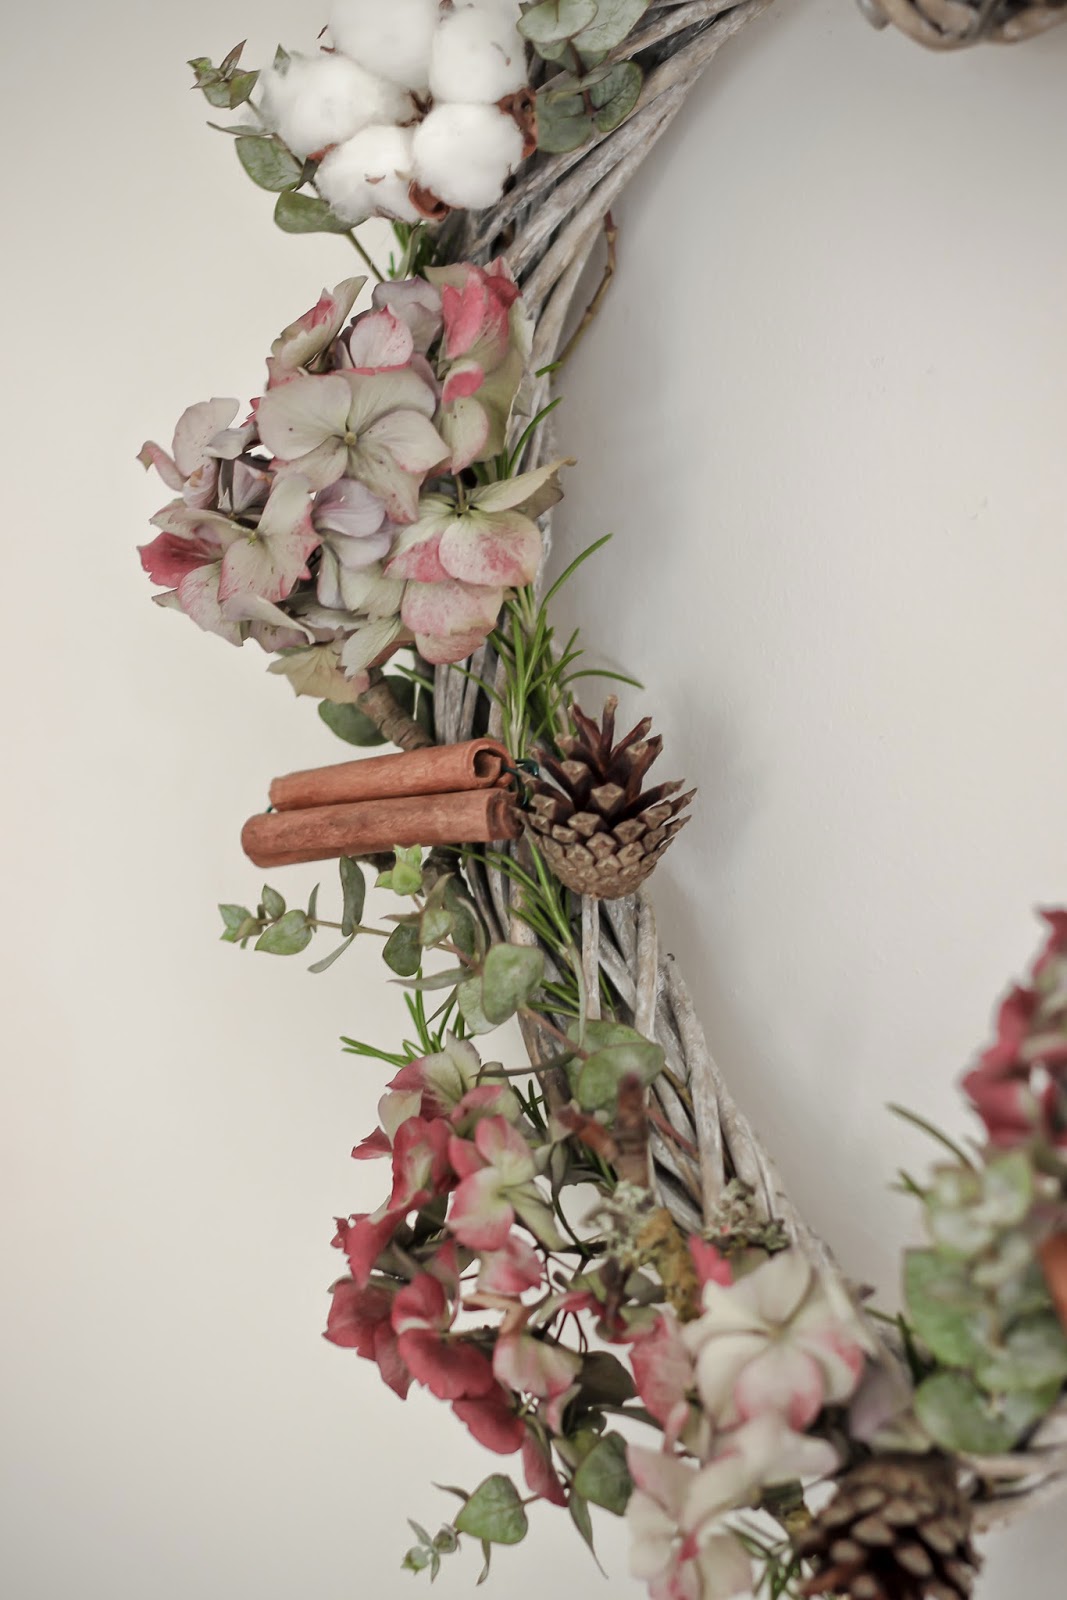 A dried Hydrangea, eucalyptus and rosemary wreath